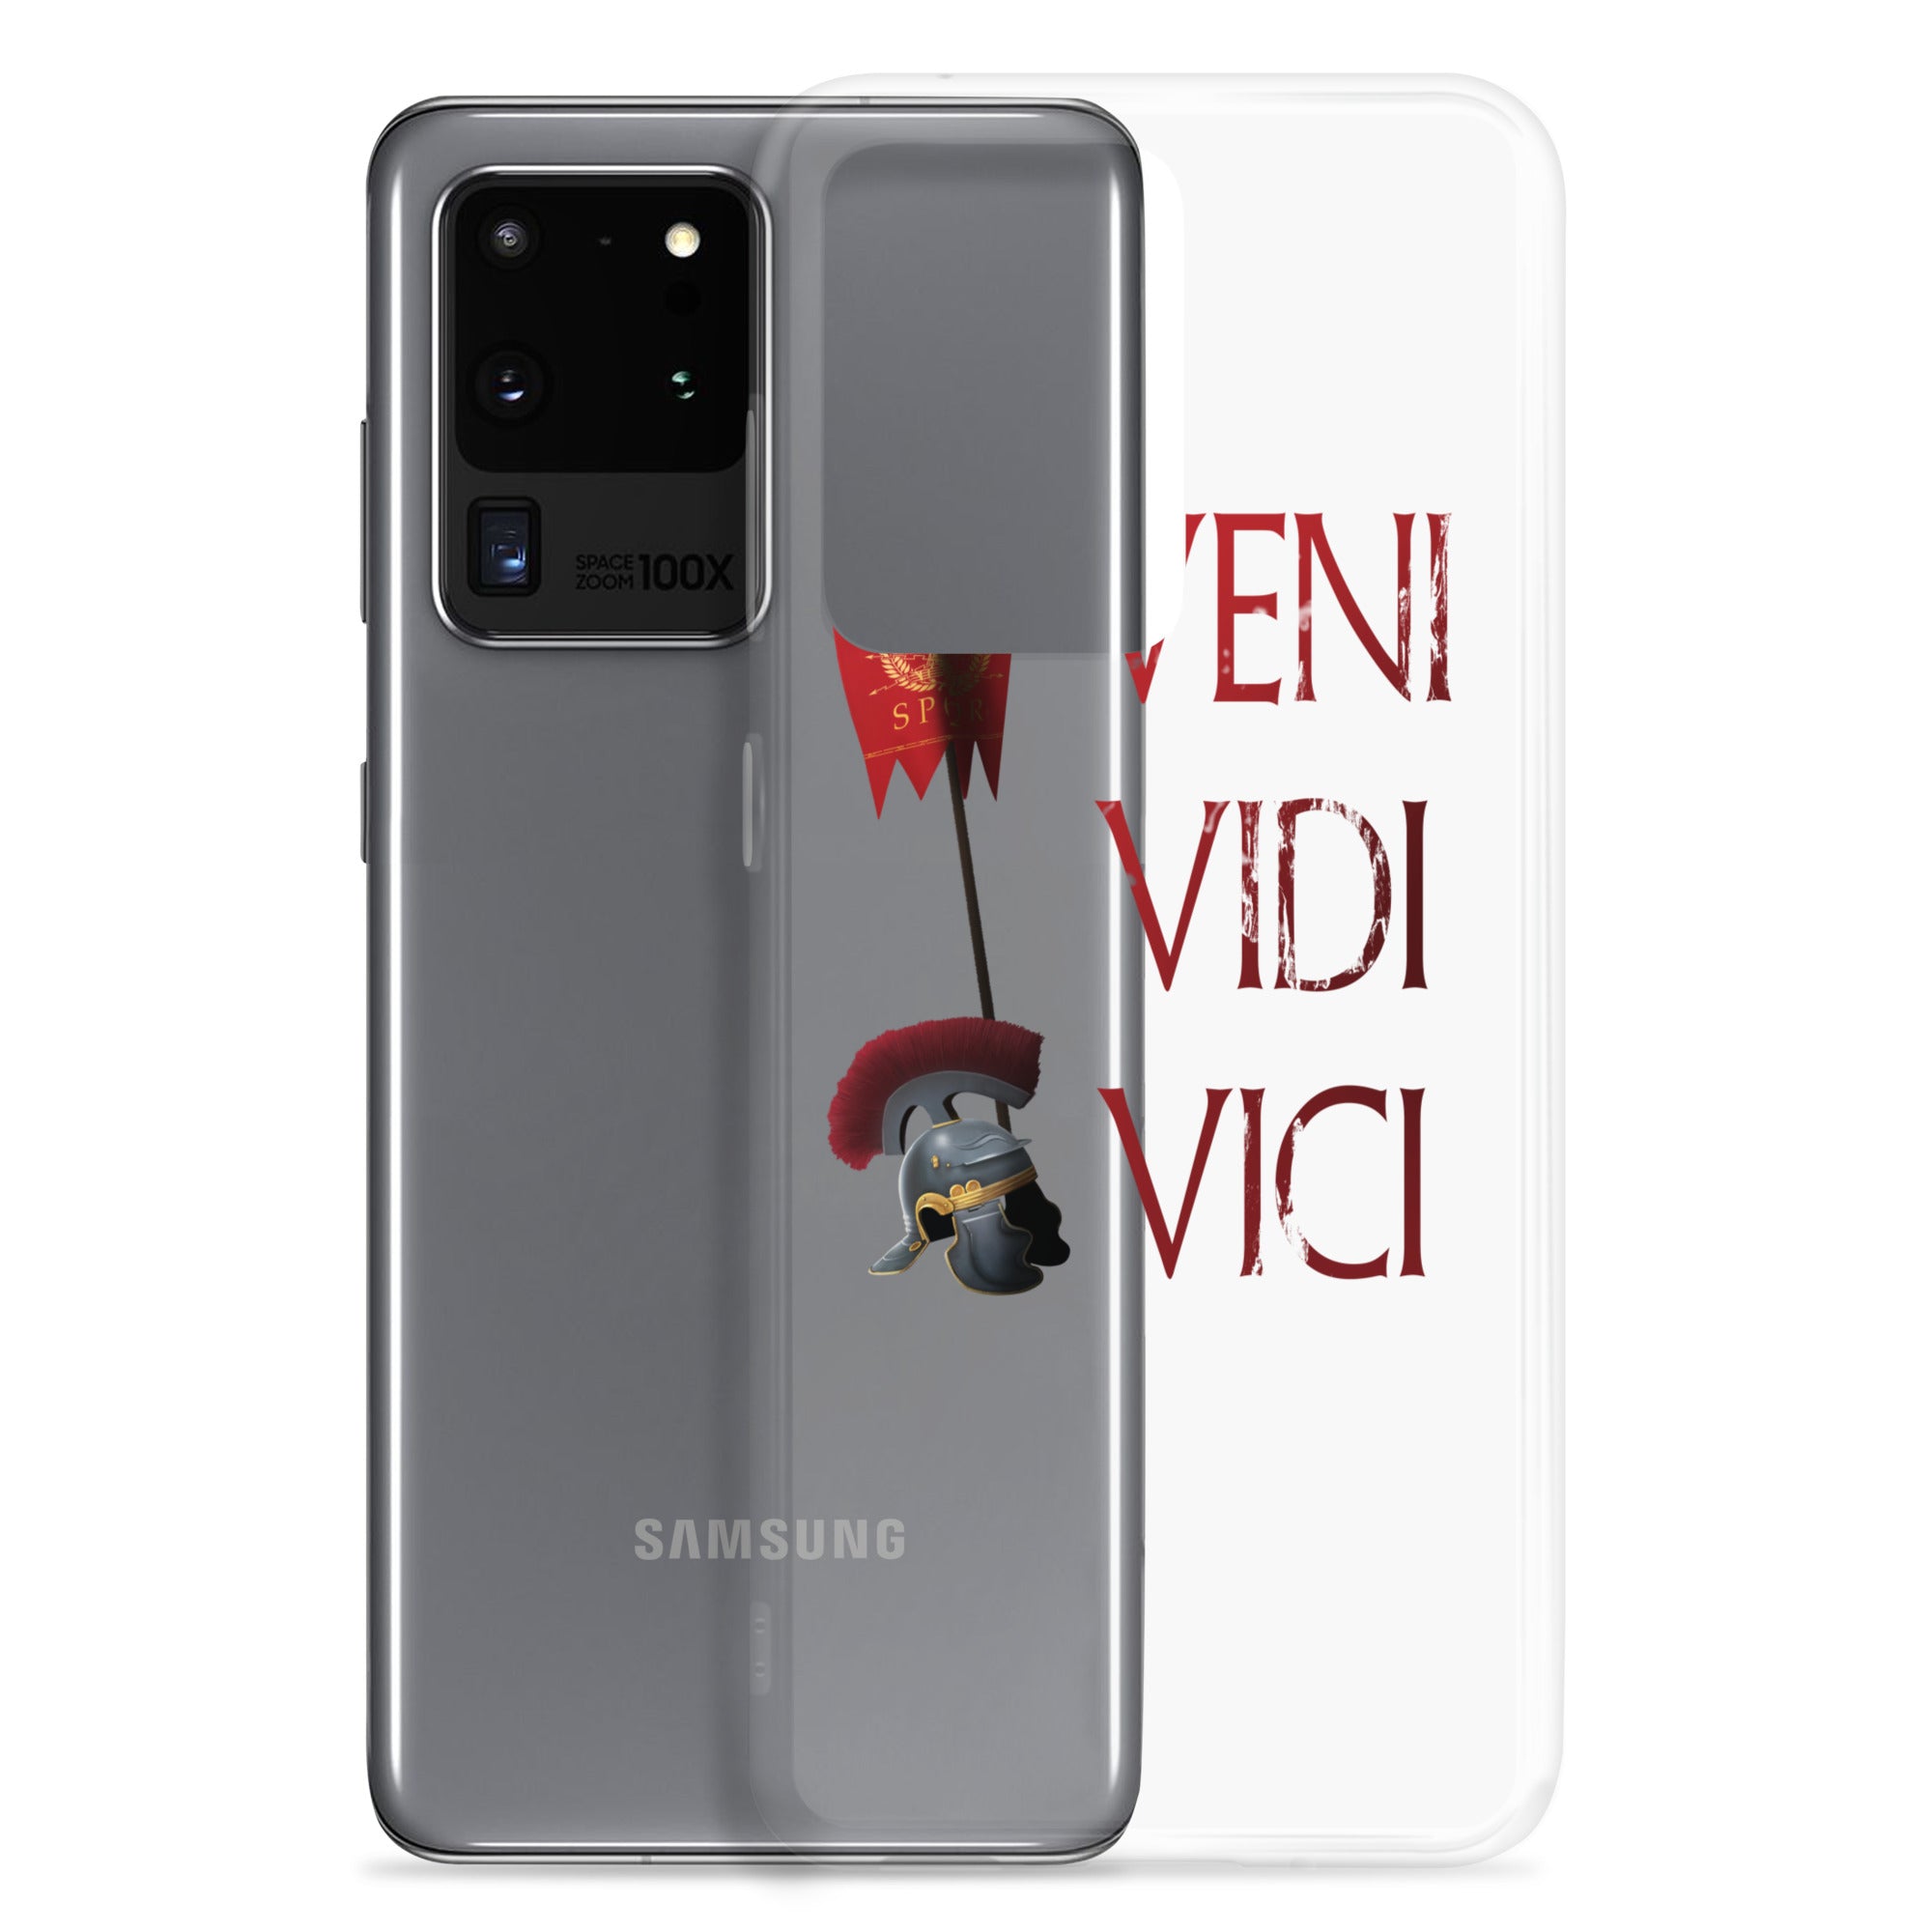 Veni Vidi Vici - Julius Caesar - Clear Case For Samsung®